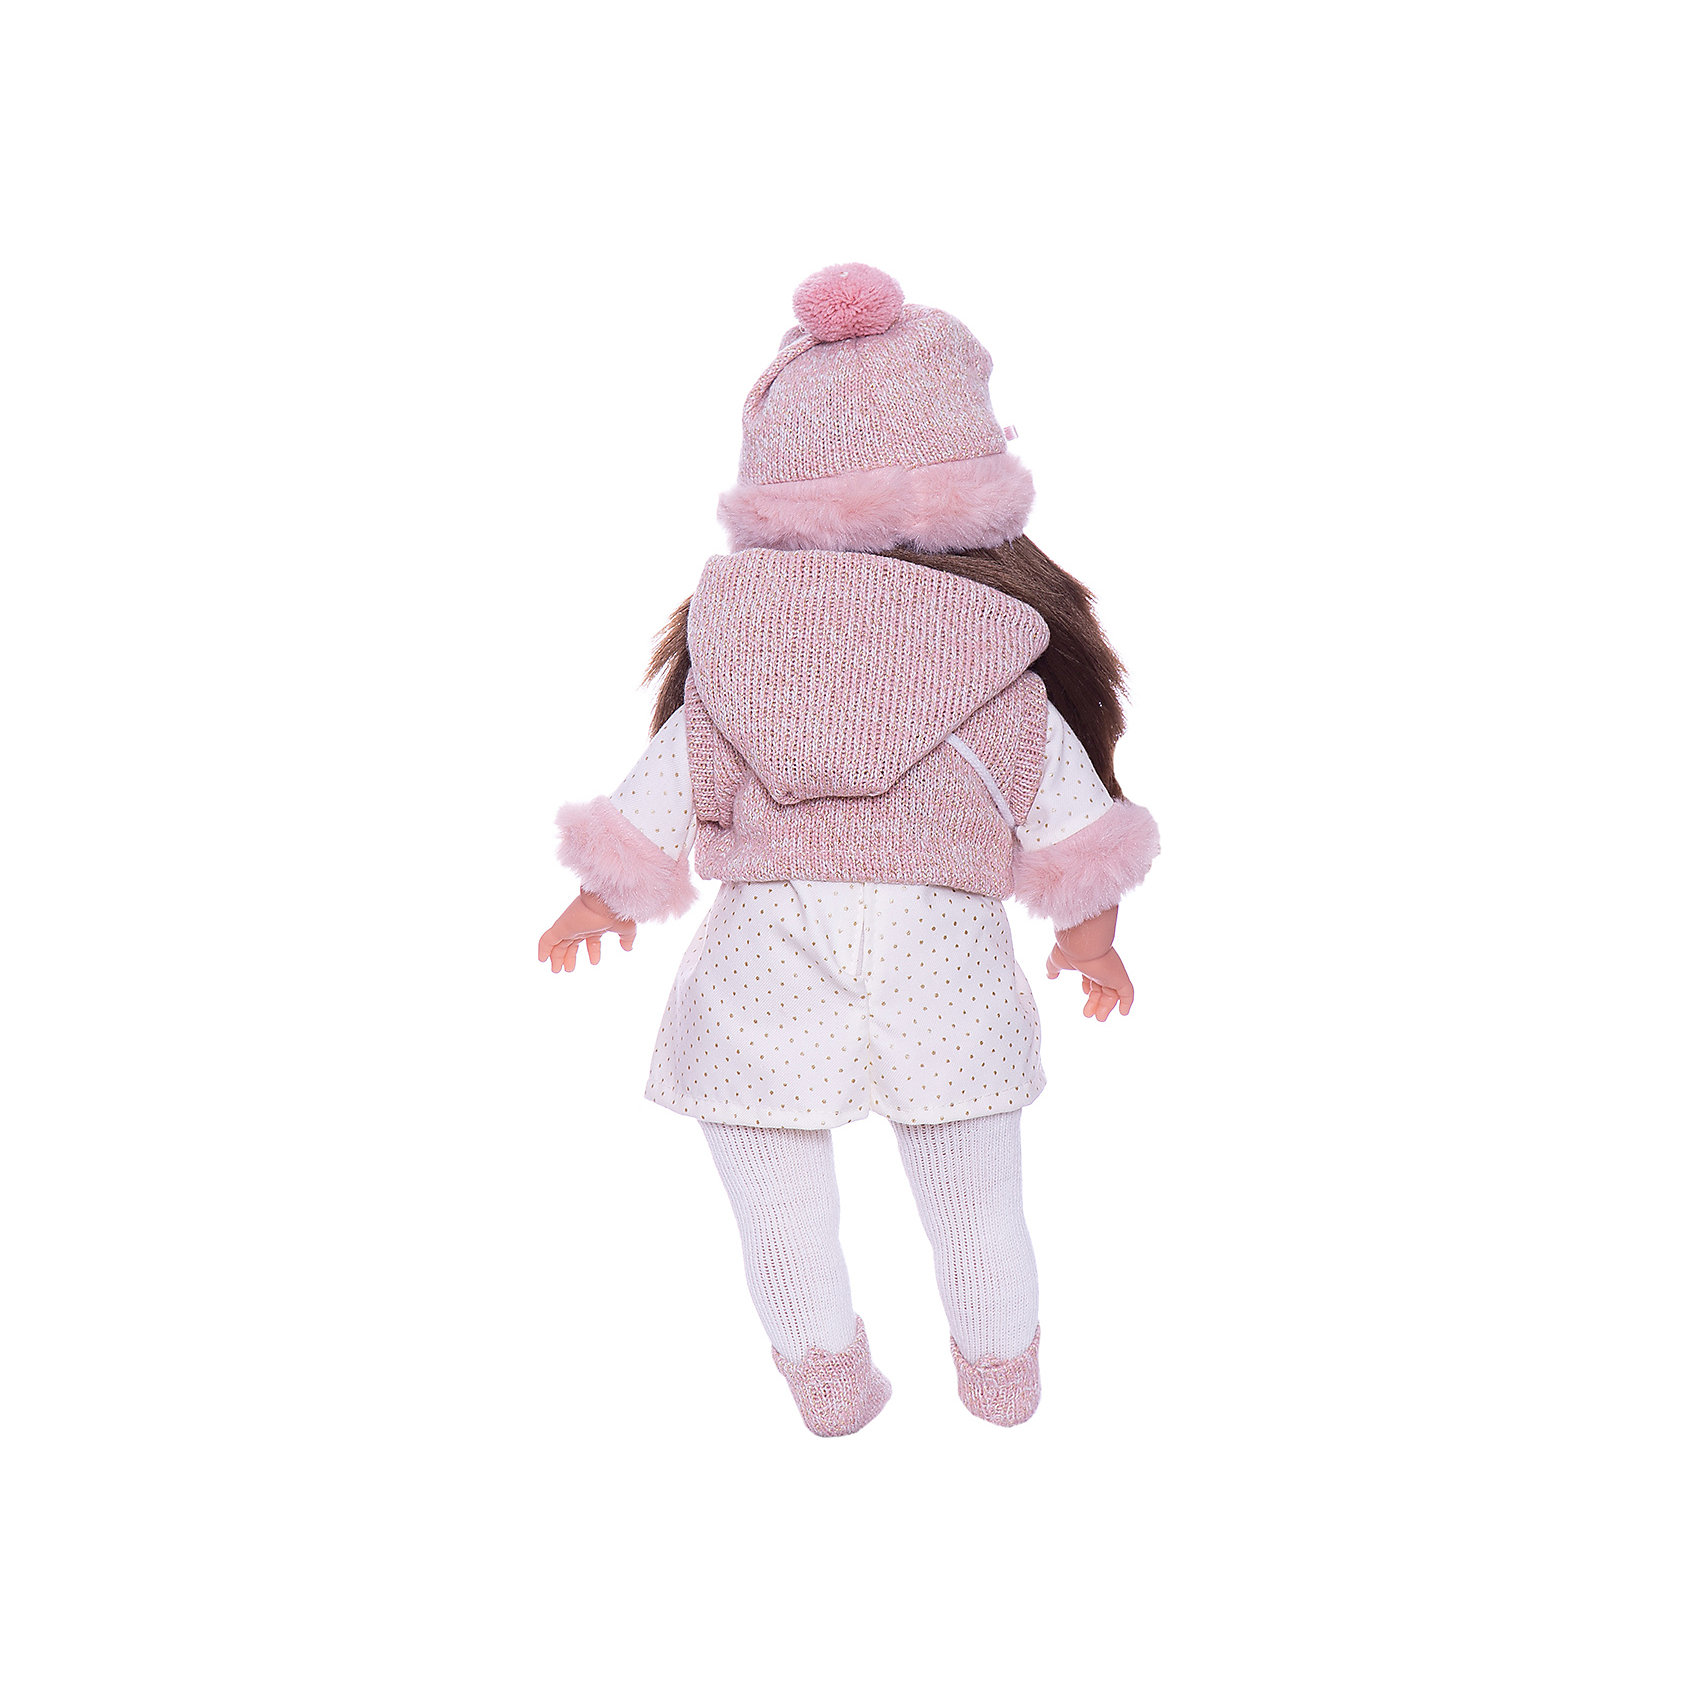 фото Кукла Llorens Мартина в бело-розовом, 40 см